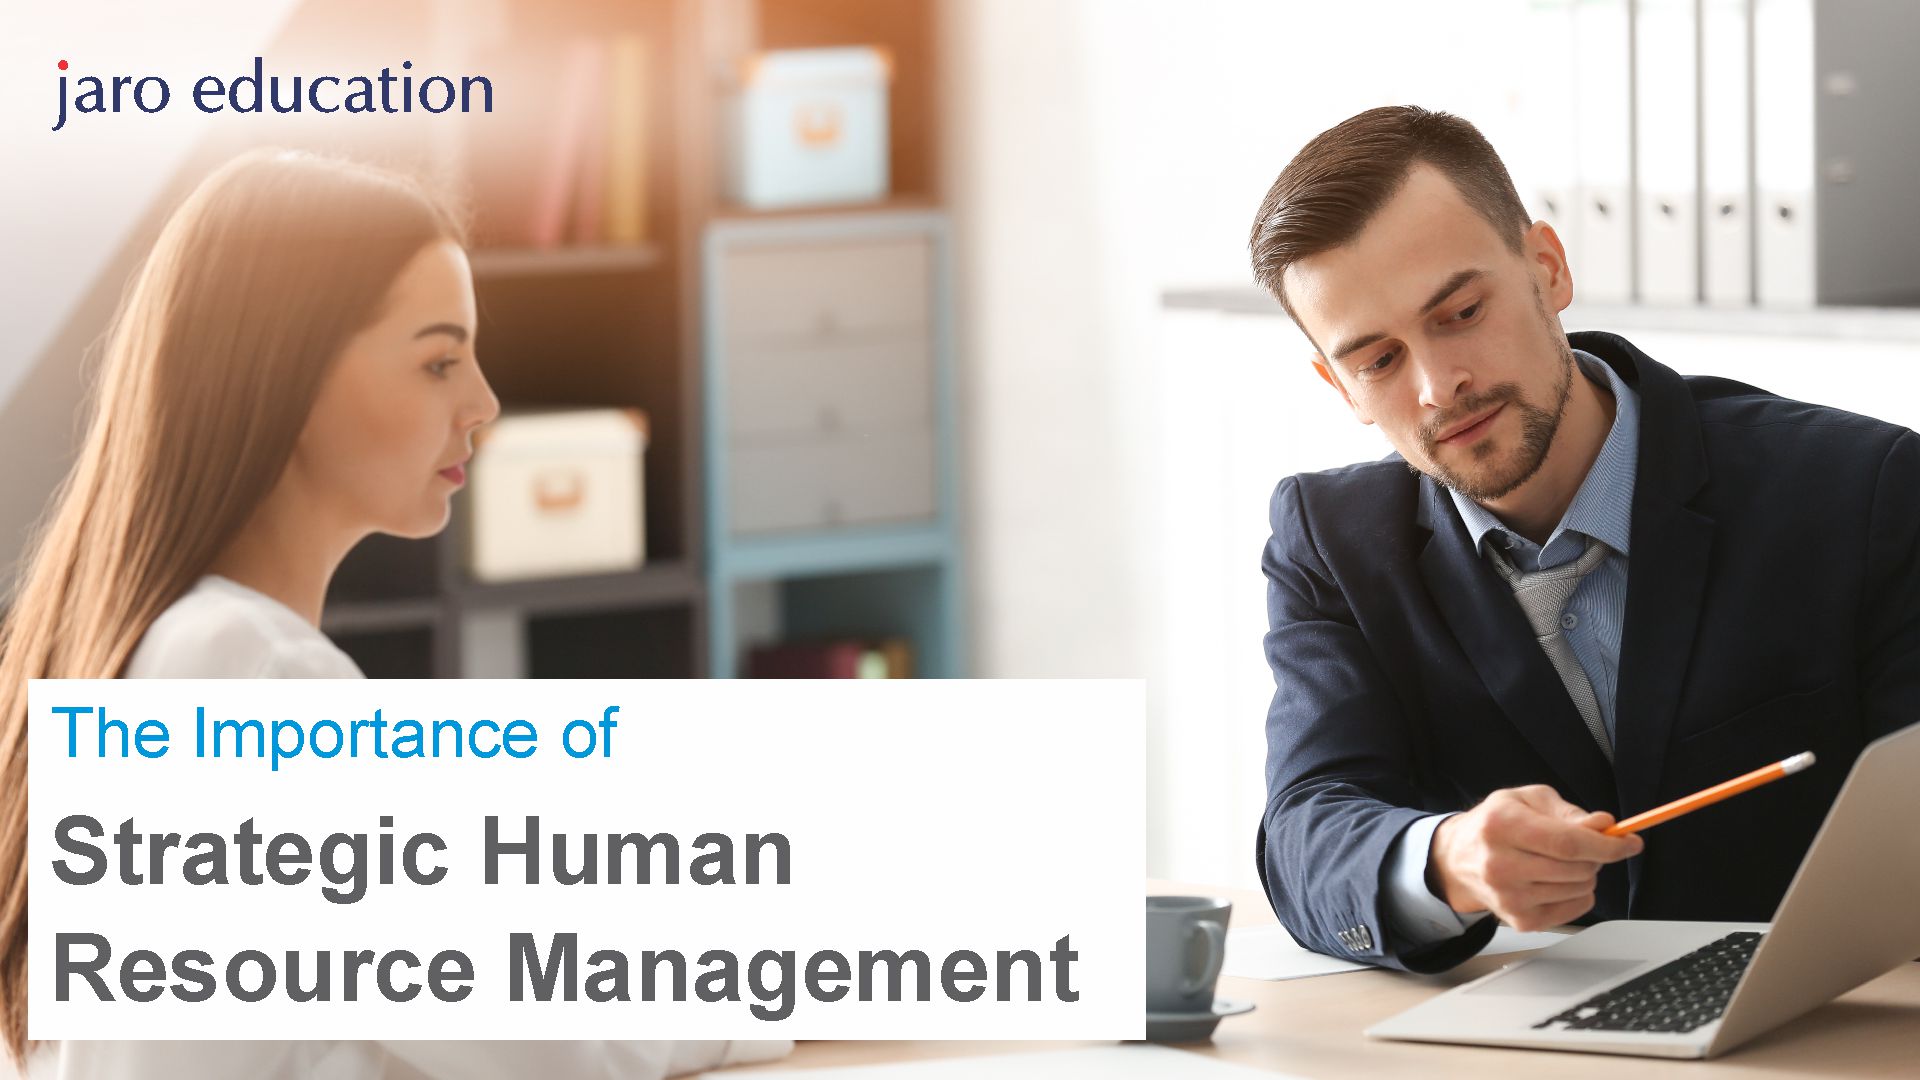 Strategic Human Resource Management Course from IIM Trichy Jaro